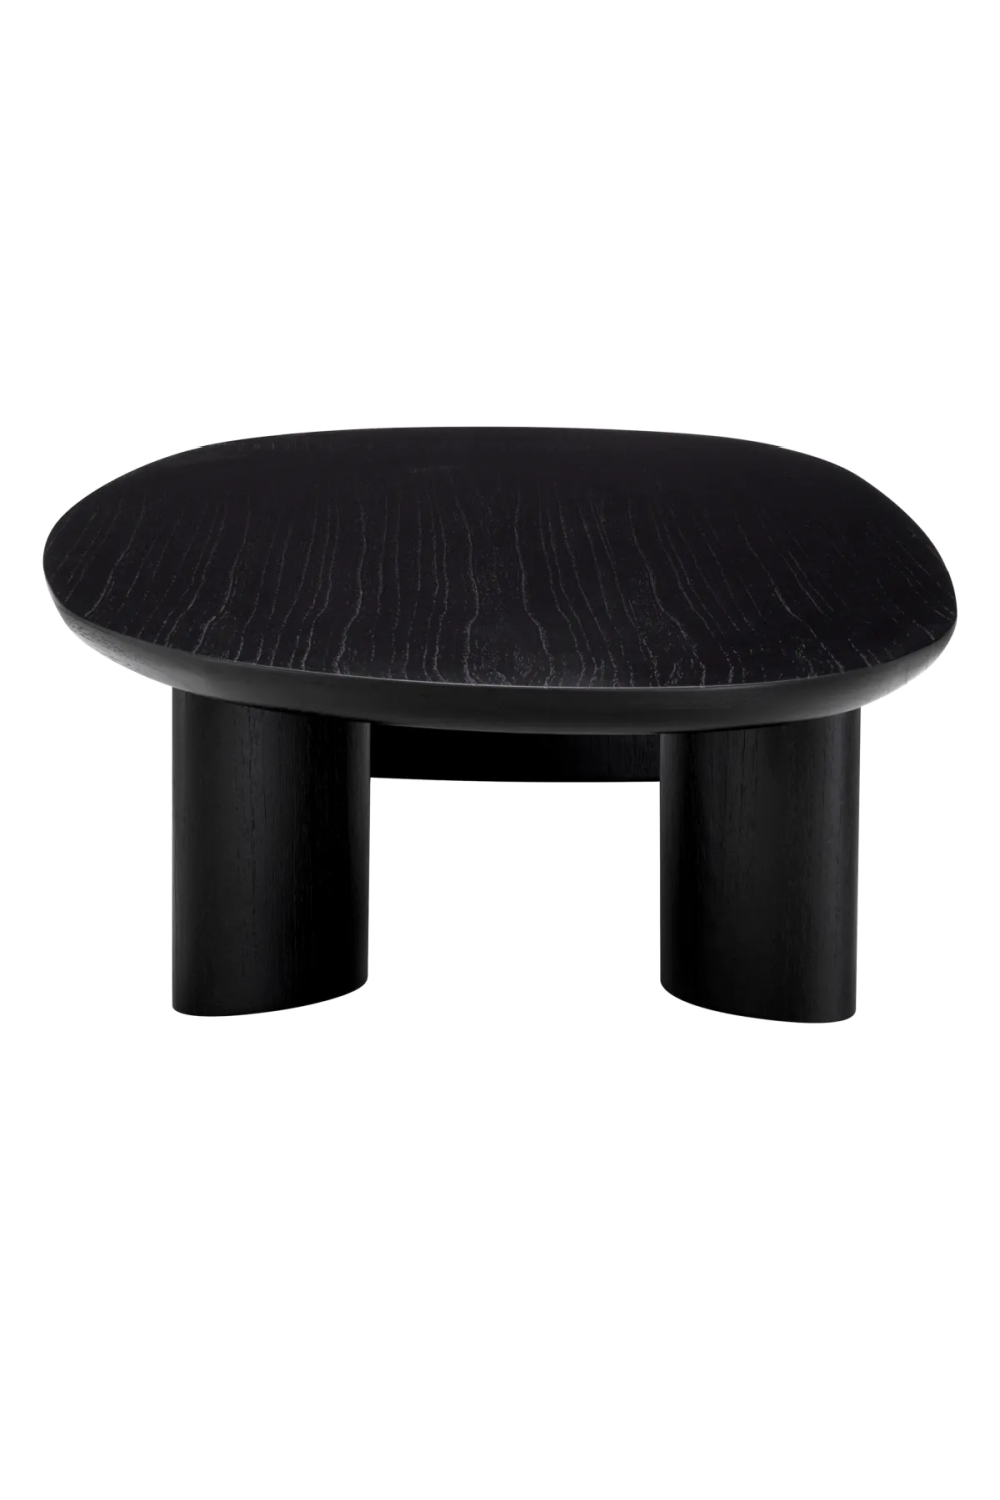 Scandi Oak Oval Coffee Table | Eichholtz Lindner | Oroa.com